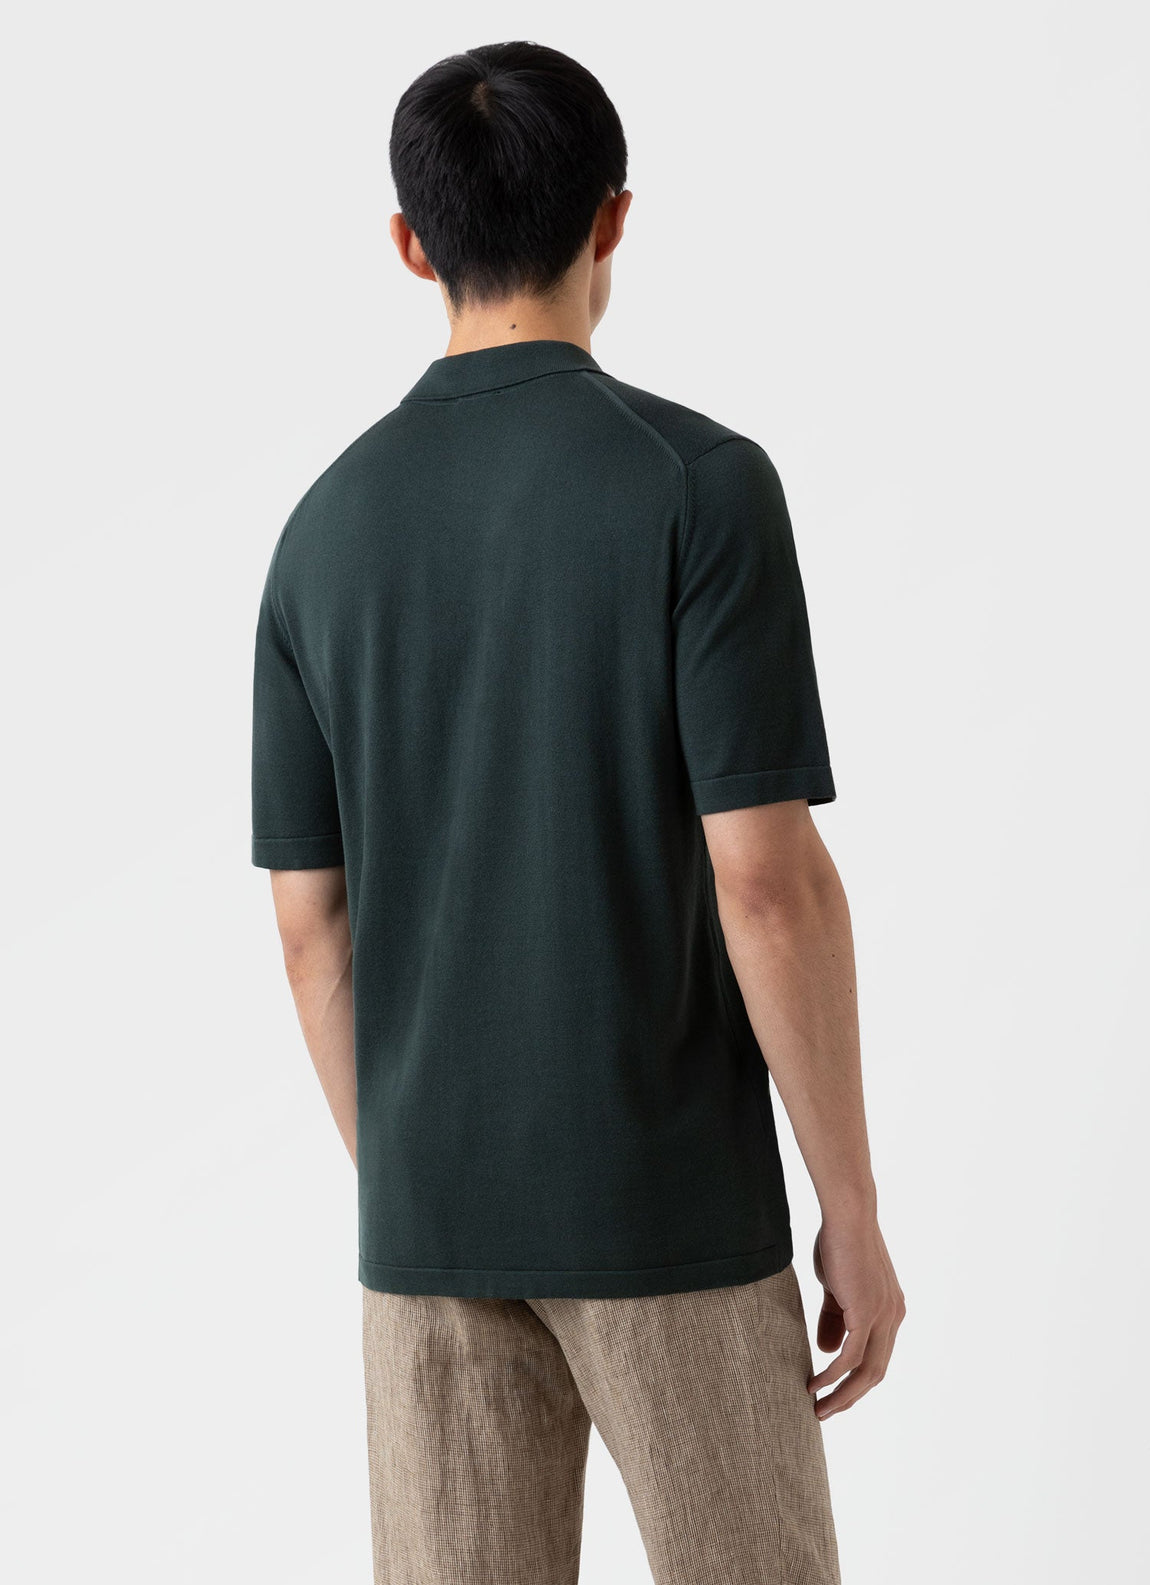 Men's Sea Island Cotton Knit Shirt in Seaweed